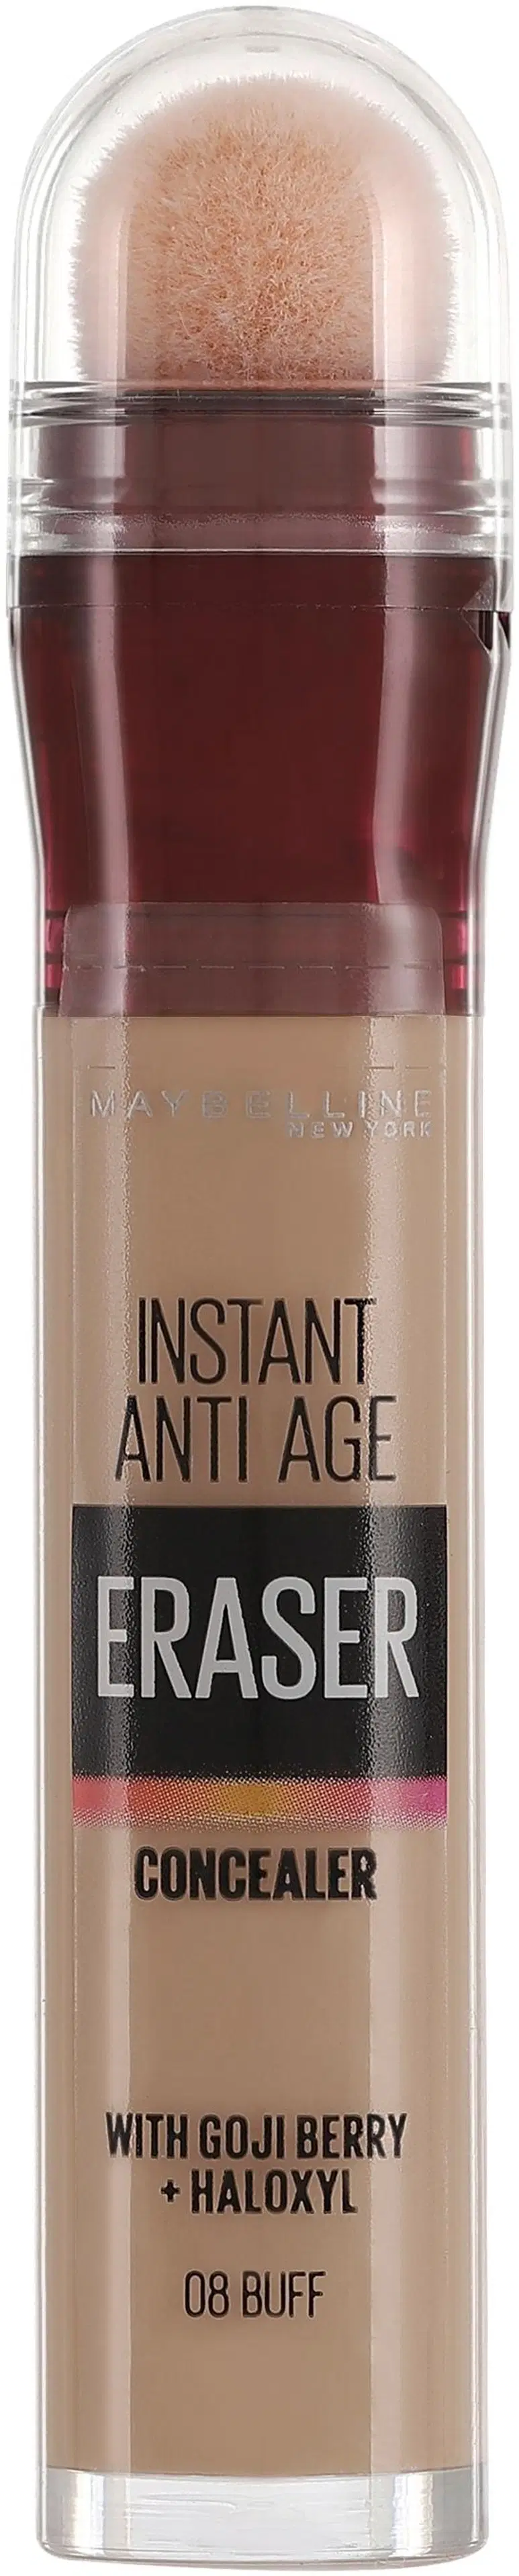 Maybelline New York Instant Anti Age Eraser 08 Buff peitevoide 6,8ml